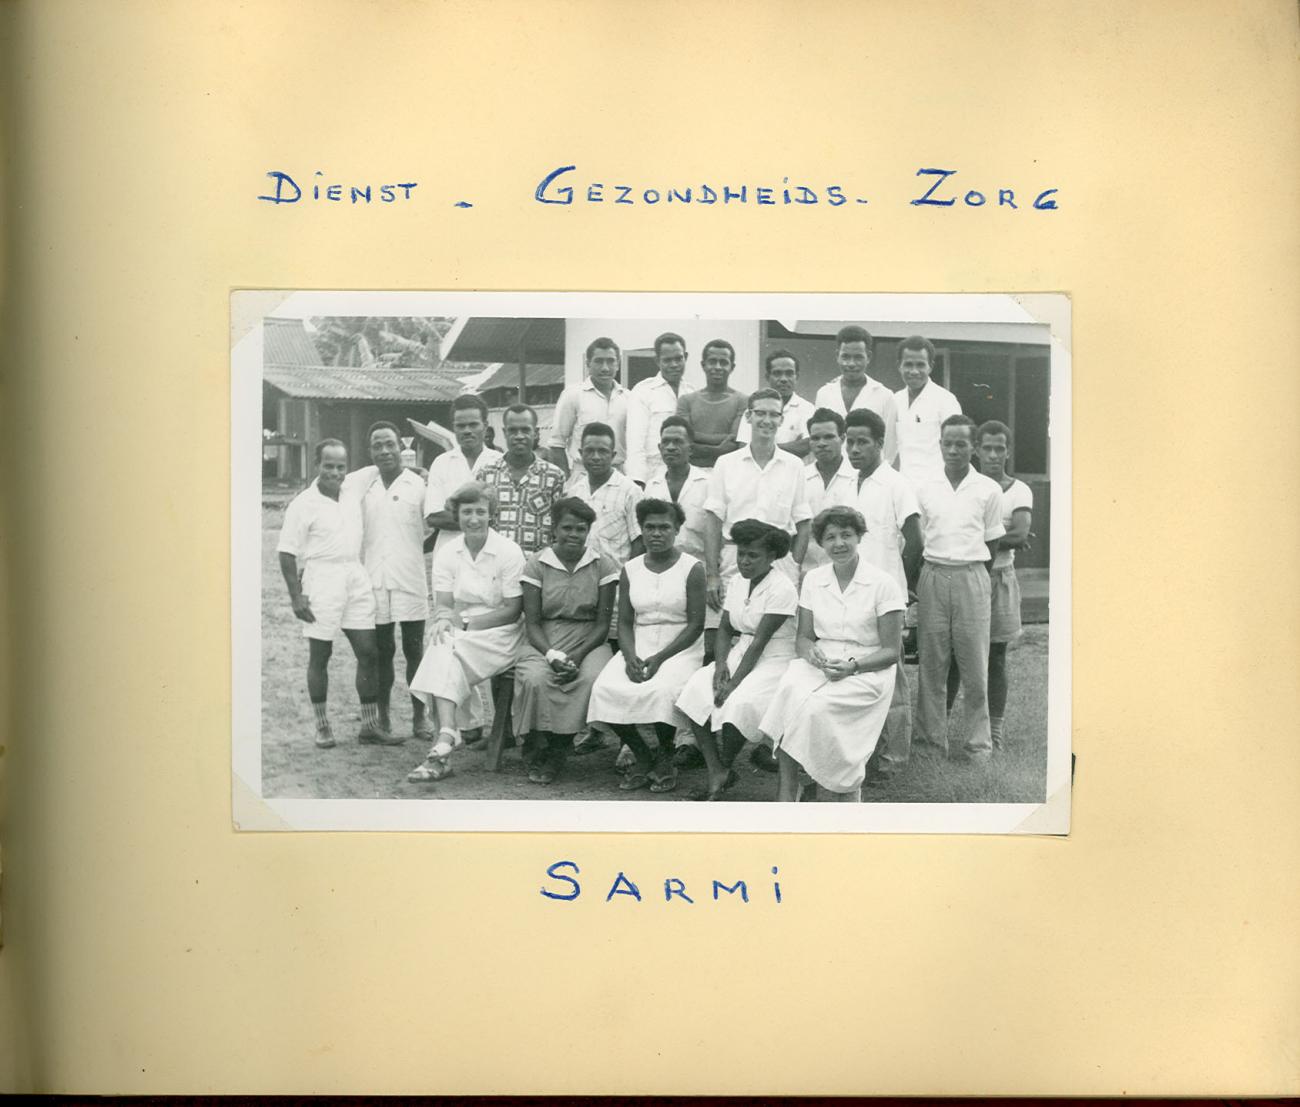 BD/83/61 - 
Staff of the Health Care Service at Sarmi
